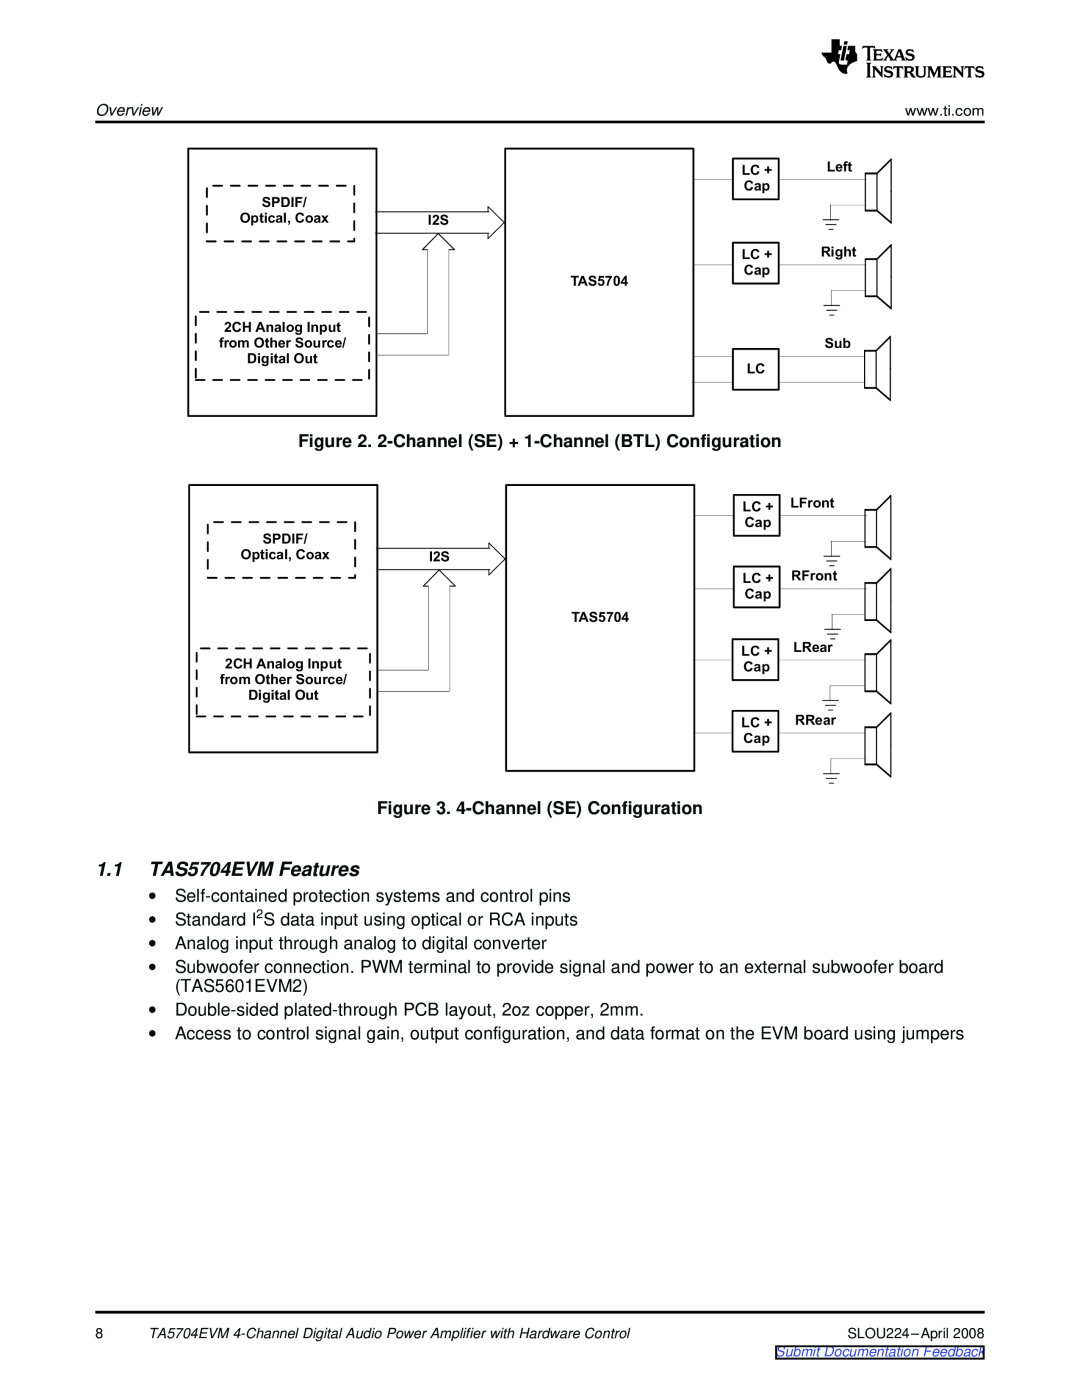 Texas Instruments TA5704EVM manual 1.1TAS5704EVM Features, 4-ChannelSE Configuration 